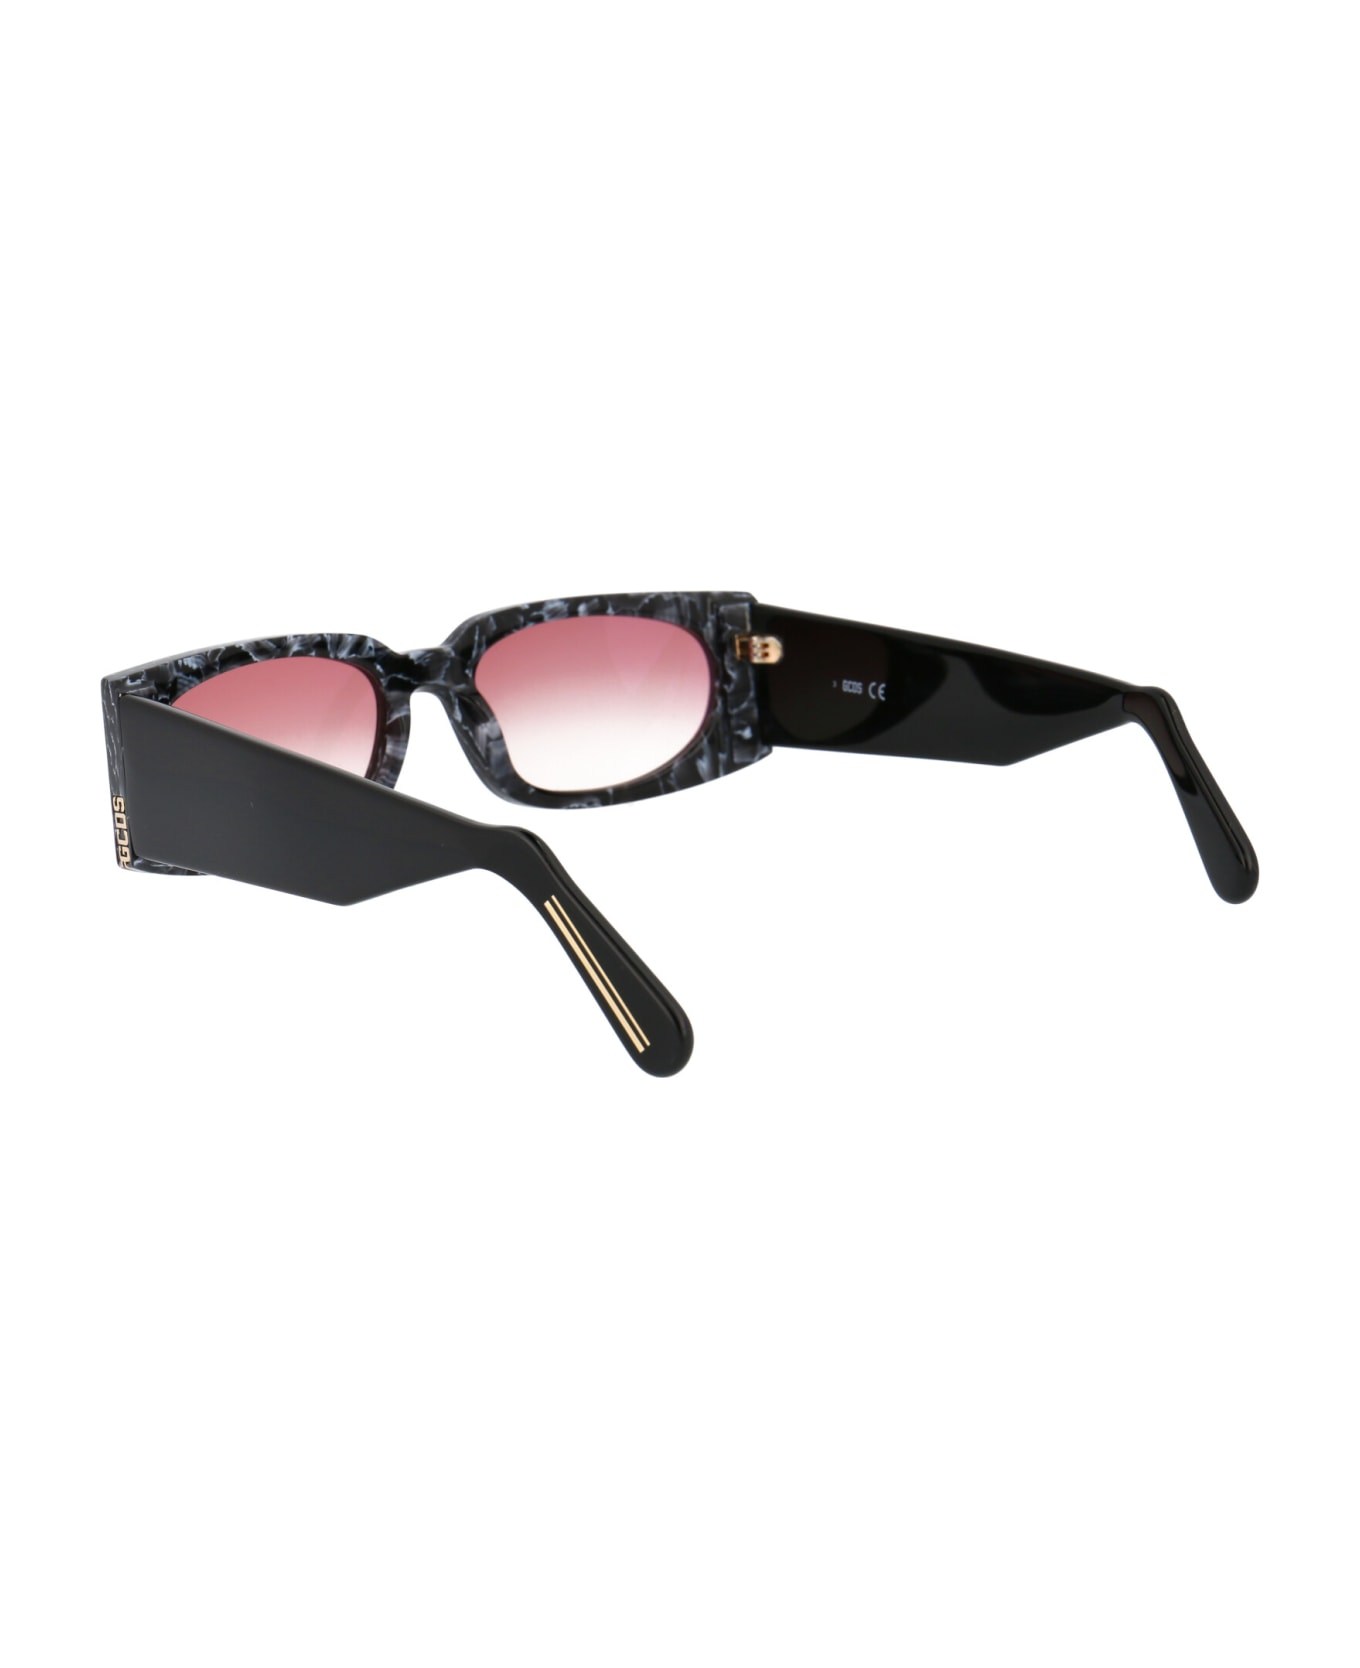 GCDS Gd0016 Sunglasses - 01T BLACK サングラス